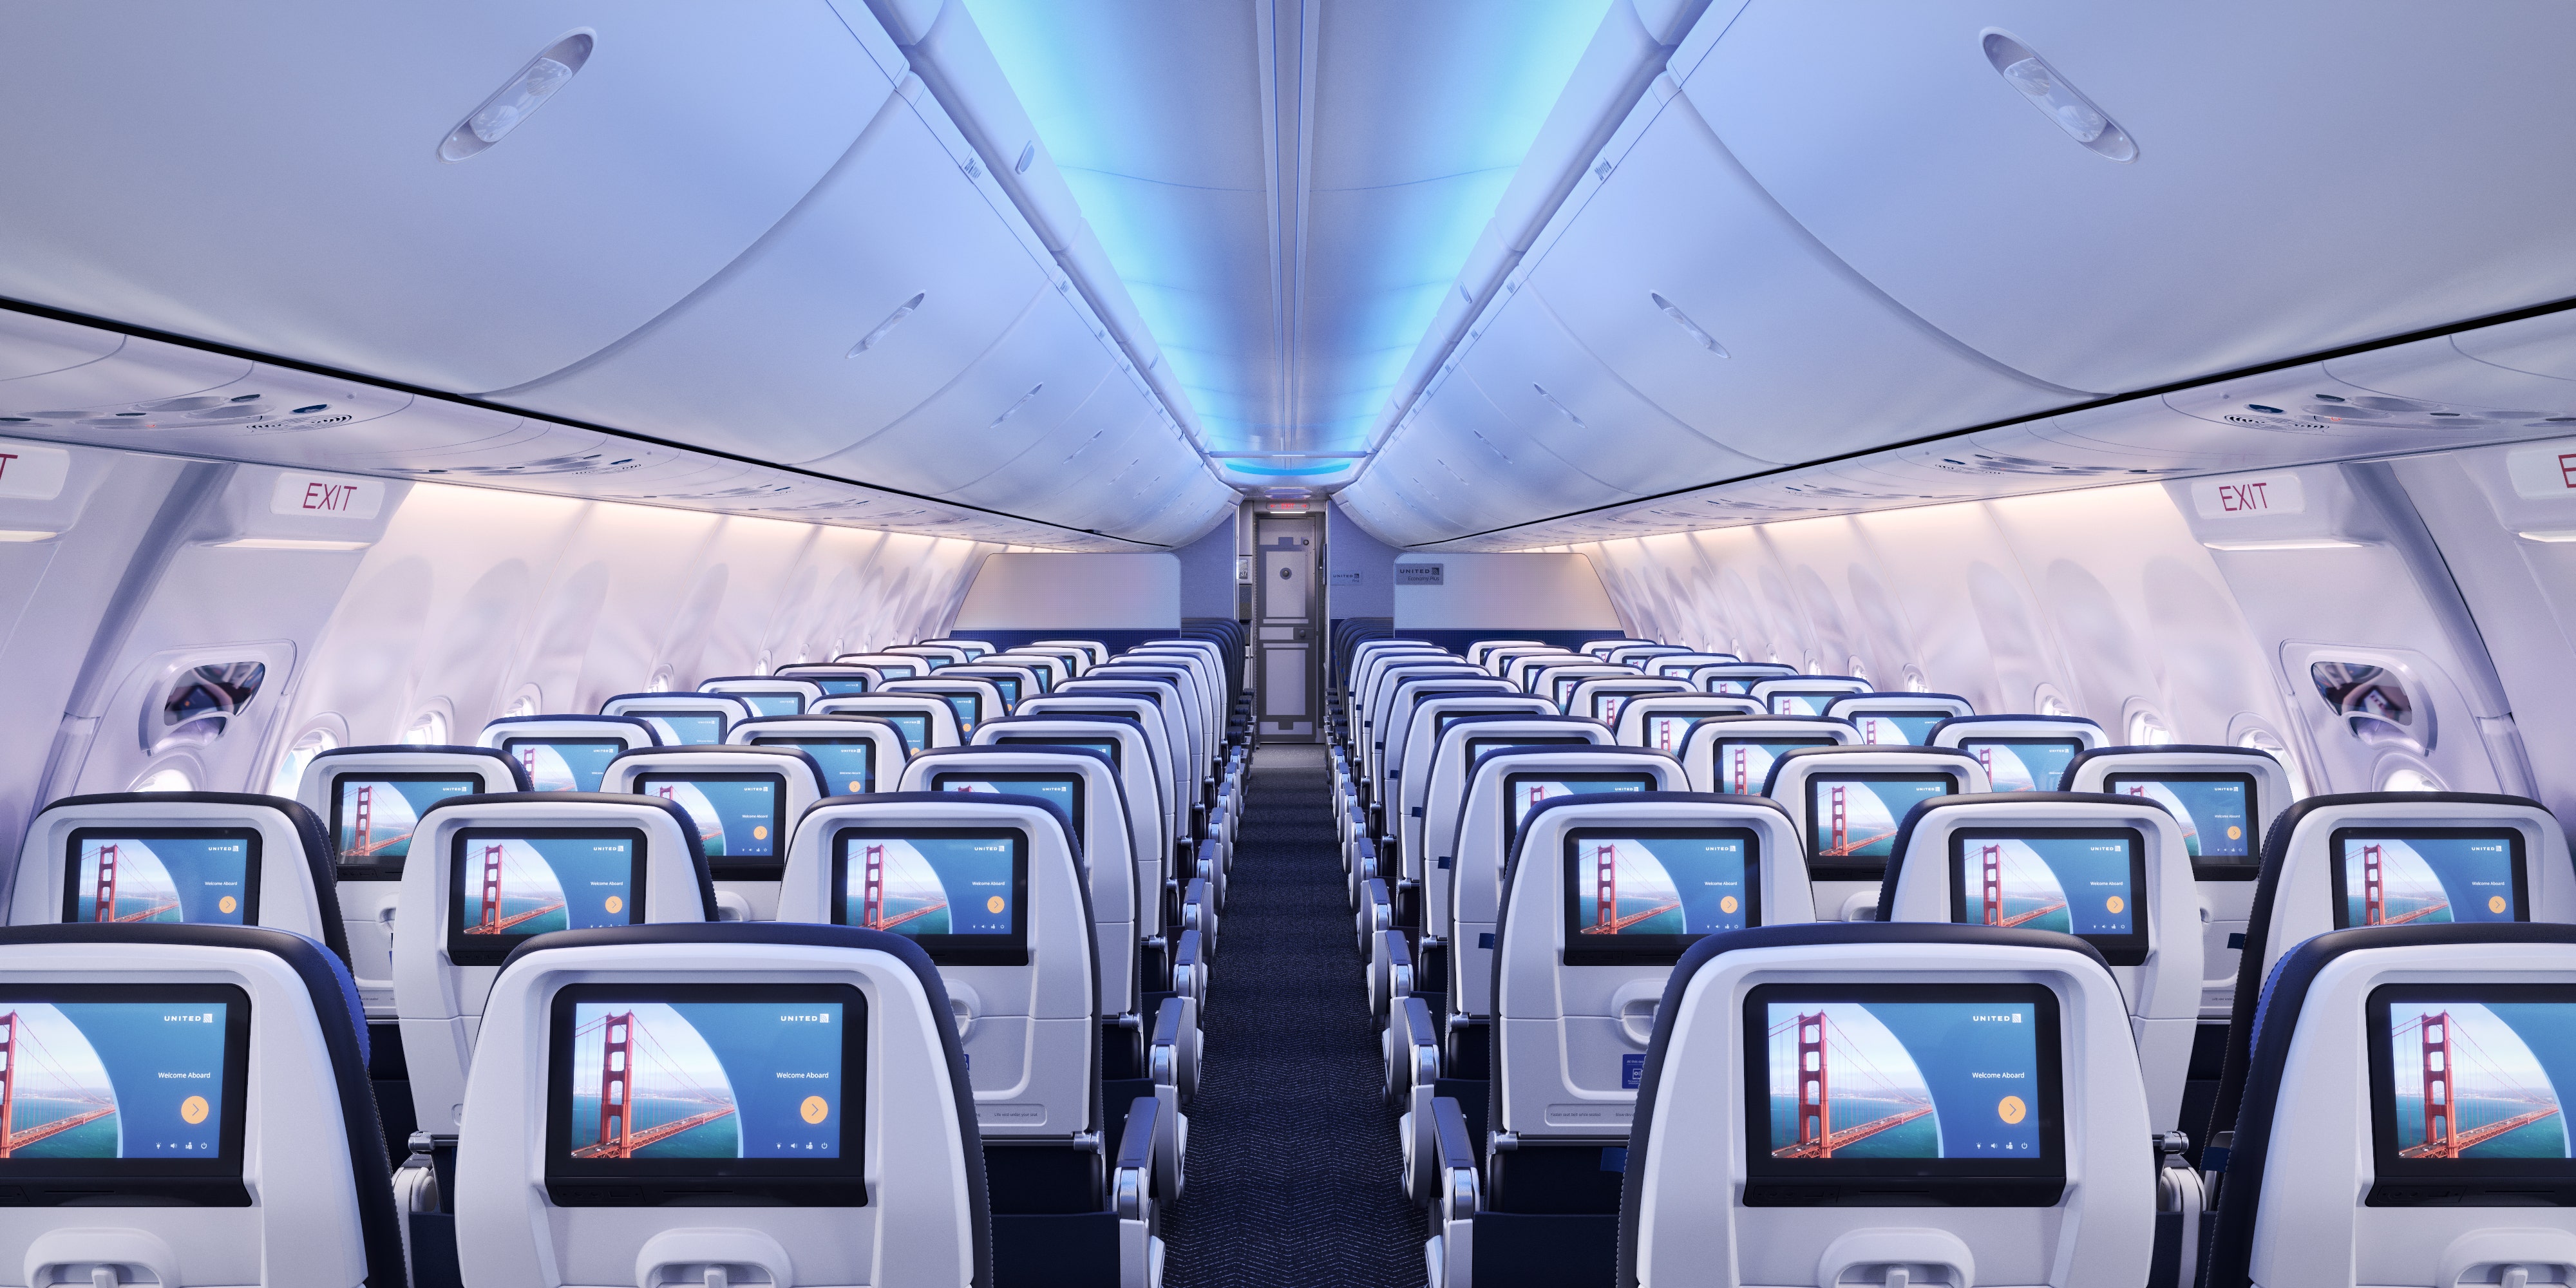 SEE IT: United Airways upgrades its flight knowledge